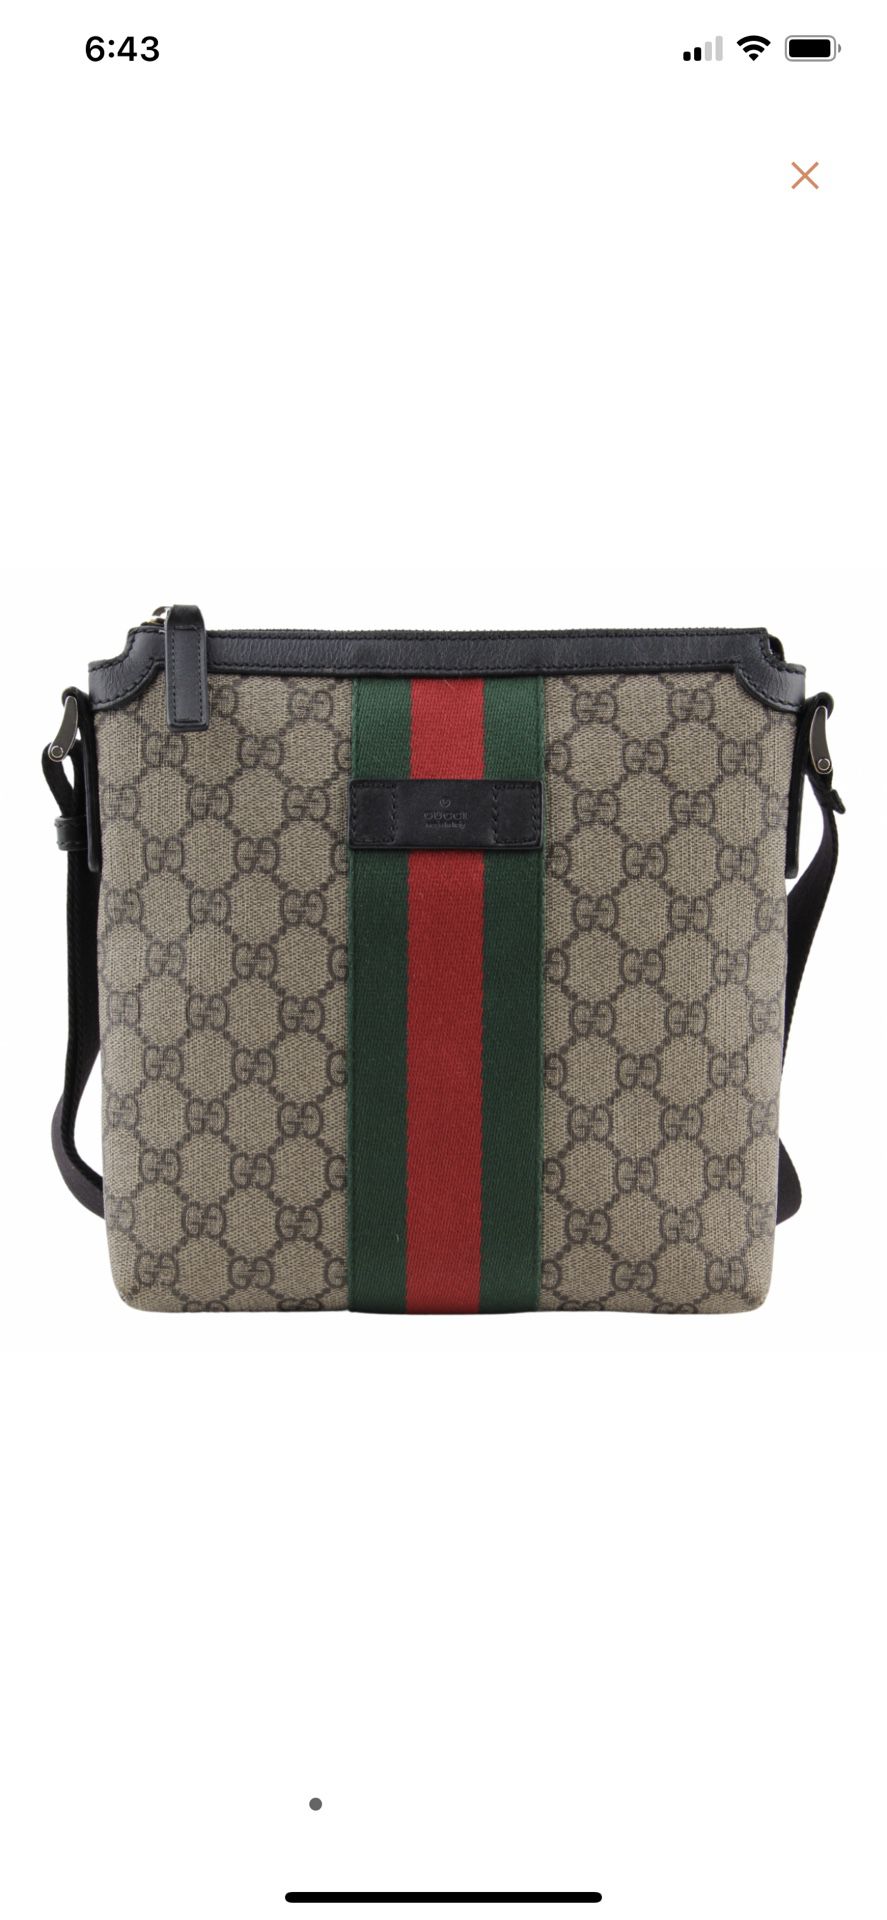 Gucci GG Supreme Monogram Web Messenger Bag